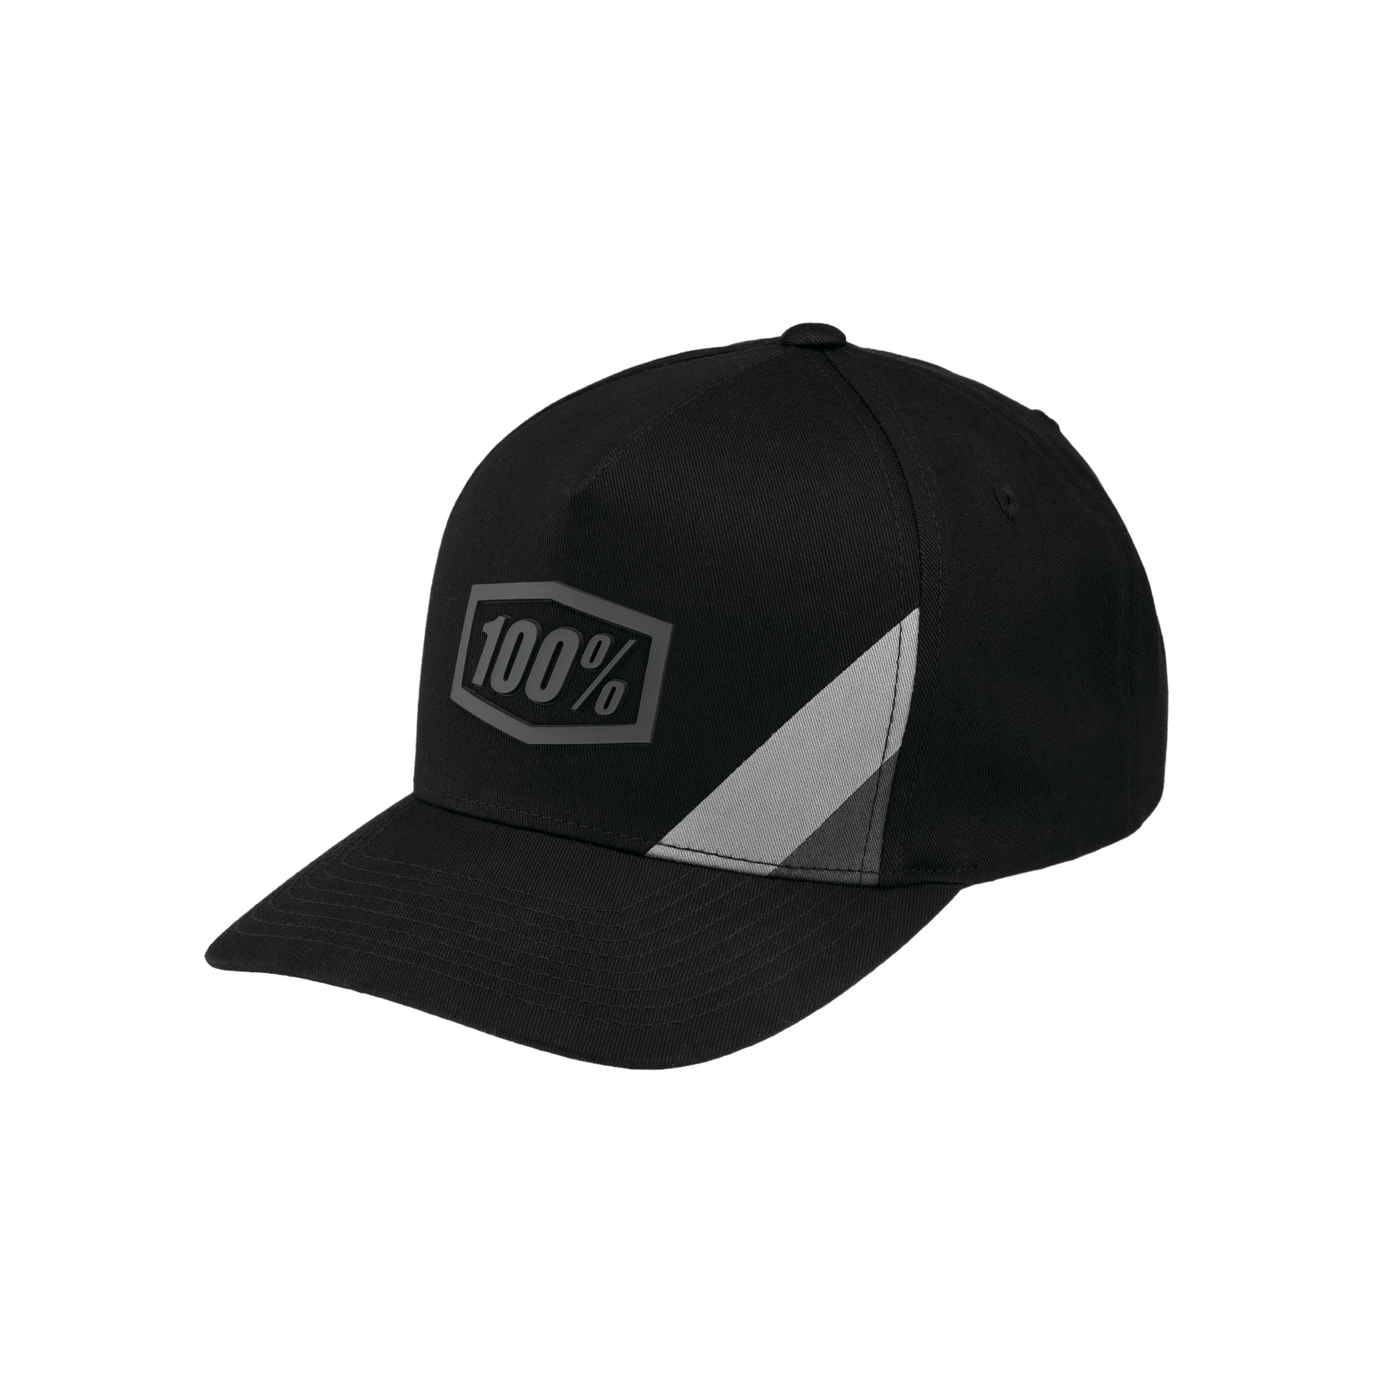 CORNERSTONE X-Fit Snapback Hat Black/Grey OSFM